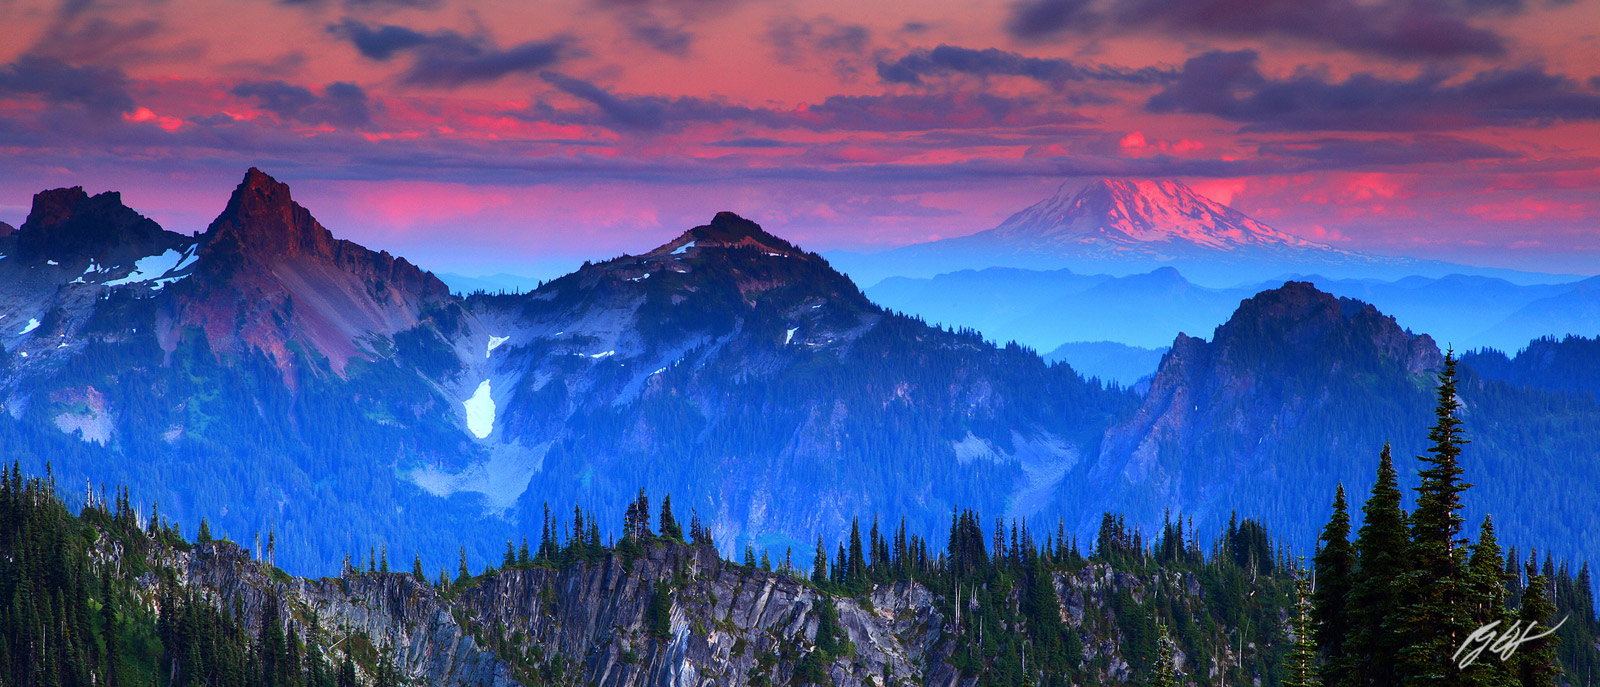 Sunset Mt Adams Viewed Through the Tatoosh Range from Mt Rainier National Park, Washington